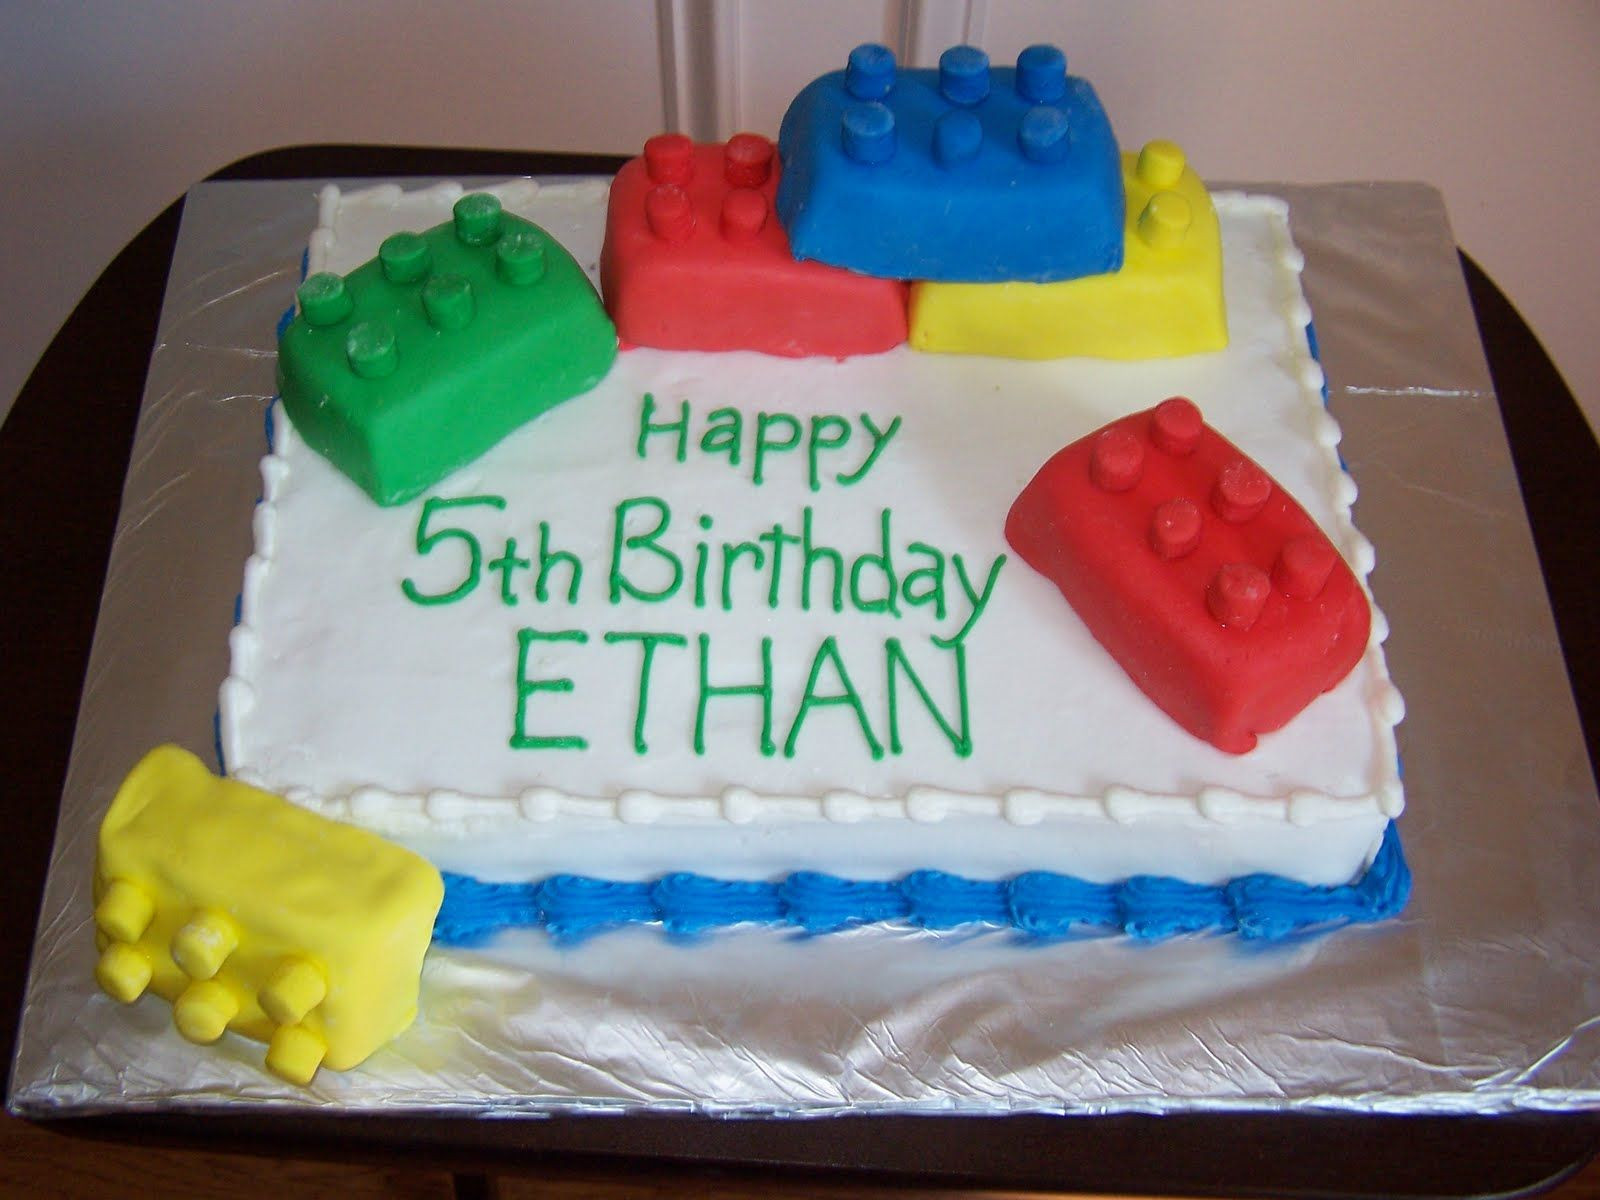 Best ideas about Lego Birthday Cake Walmart
. Save or Pin LEGO Cake Ideas for Boys Lego Cake Now.